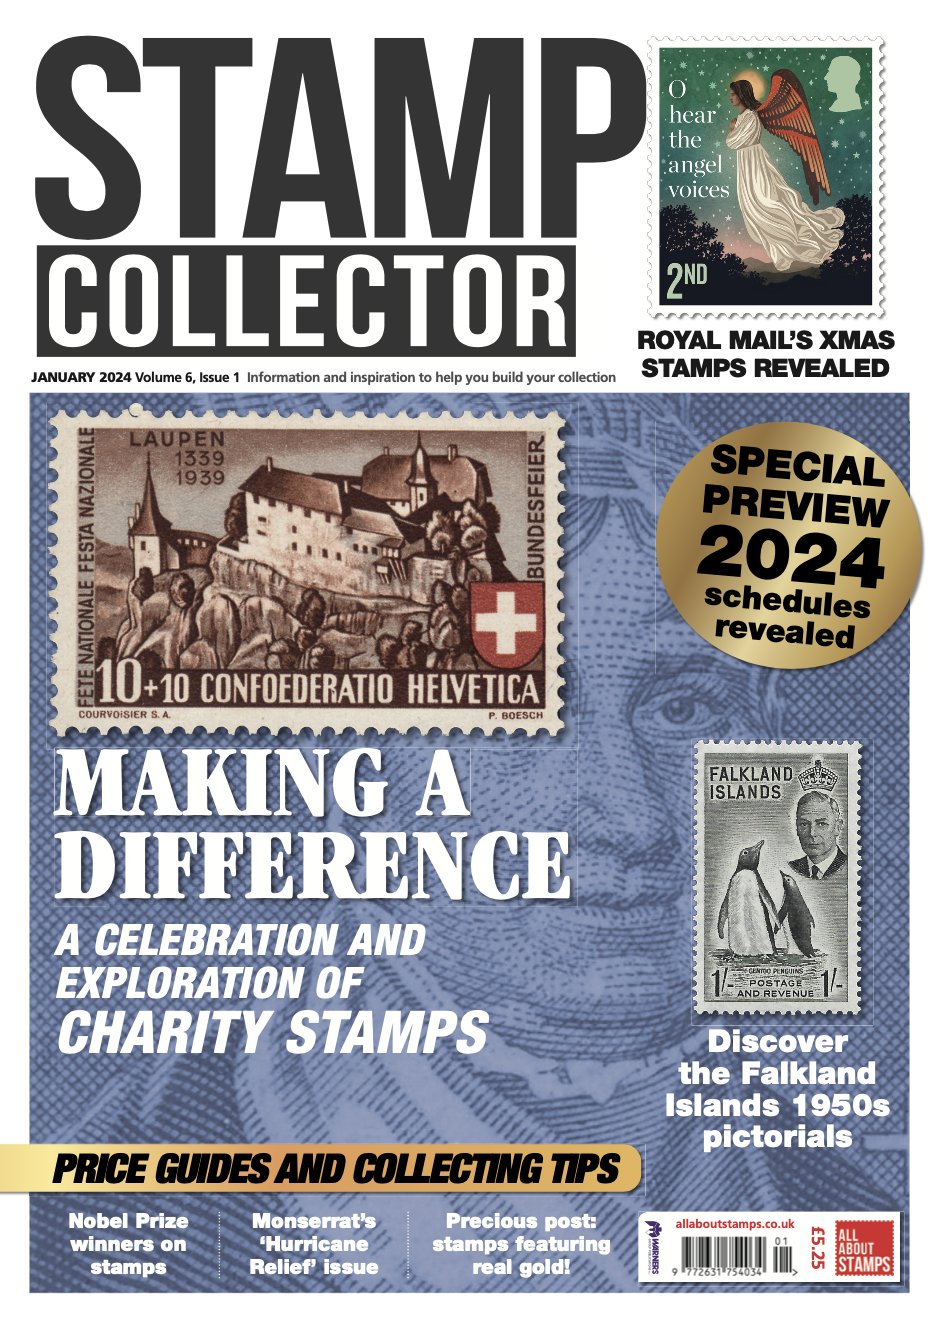 Stamp Collecting: Storage - The Digital Philatelist